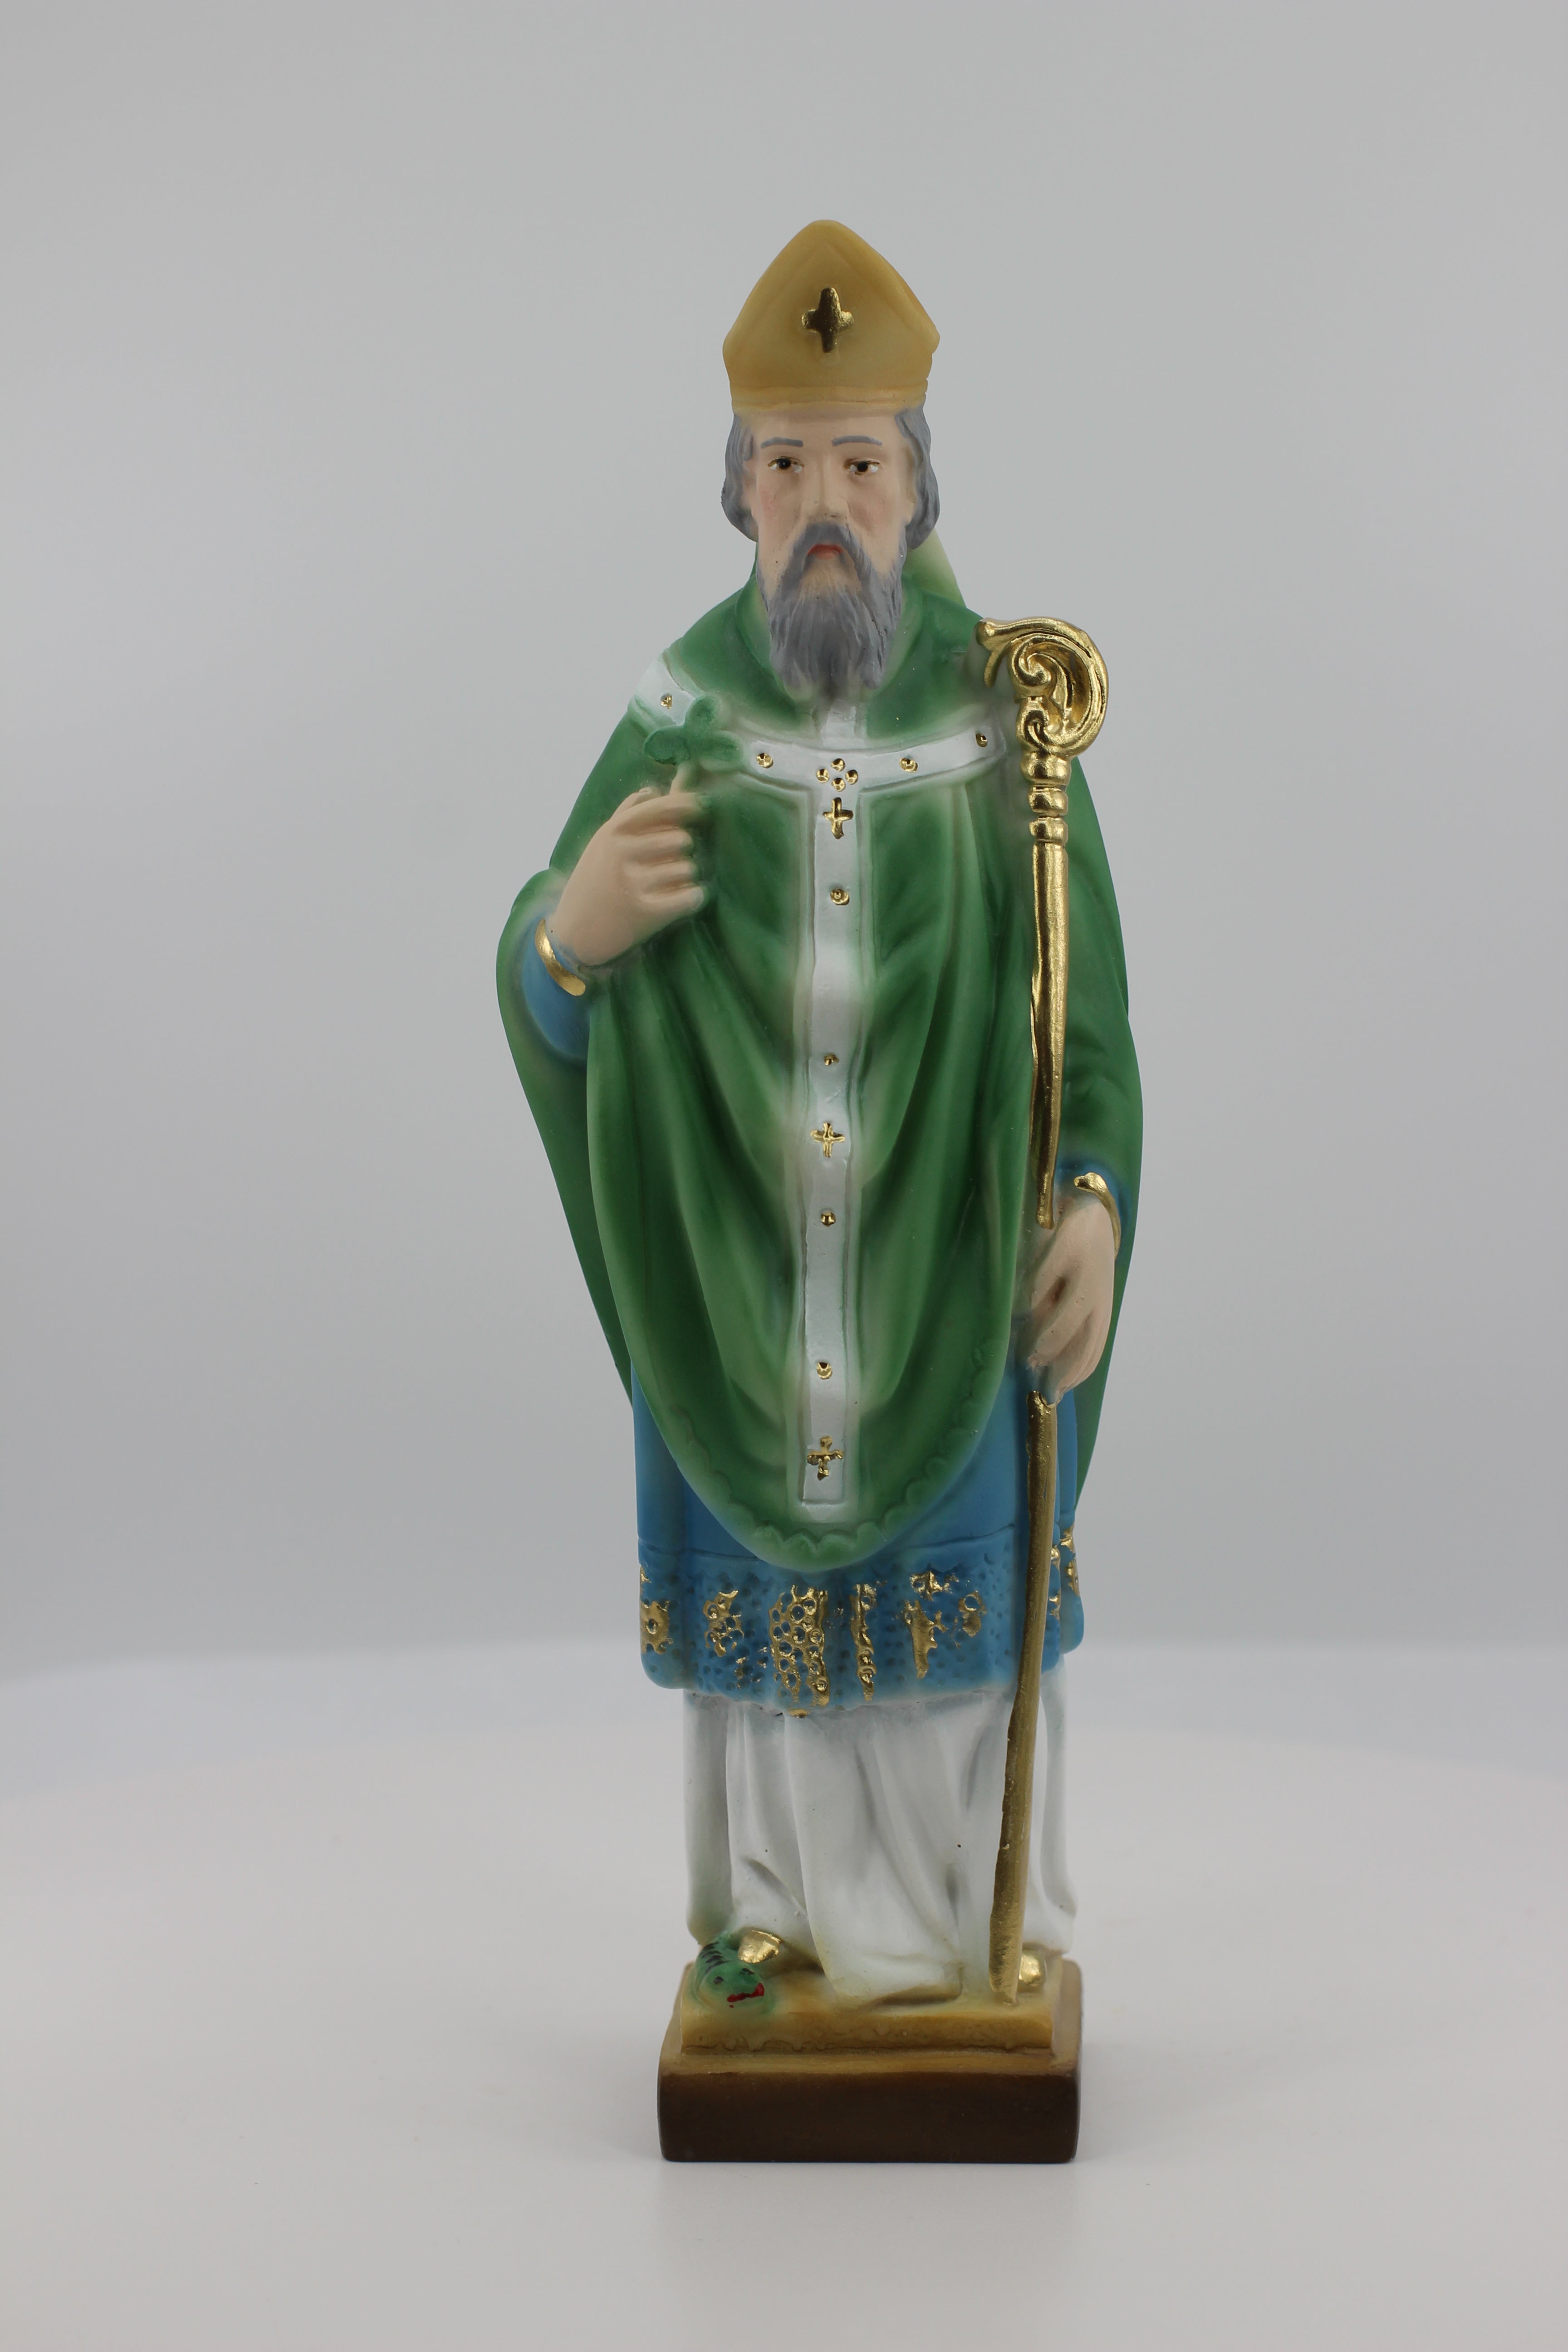 The Faith Gift  Shop Saint Patrick statue - Hand Painted in Italy - Our Tuscany Collection -Estatua de San Patricio